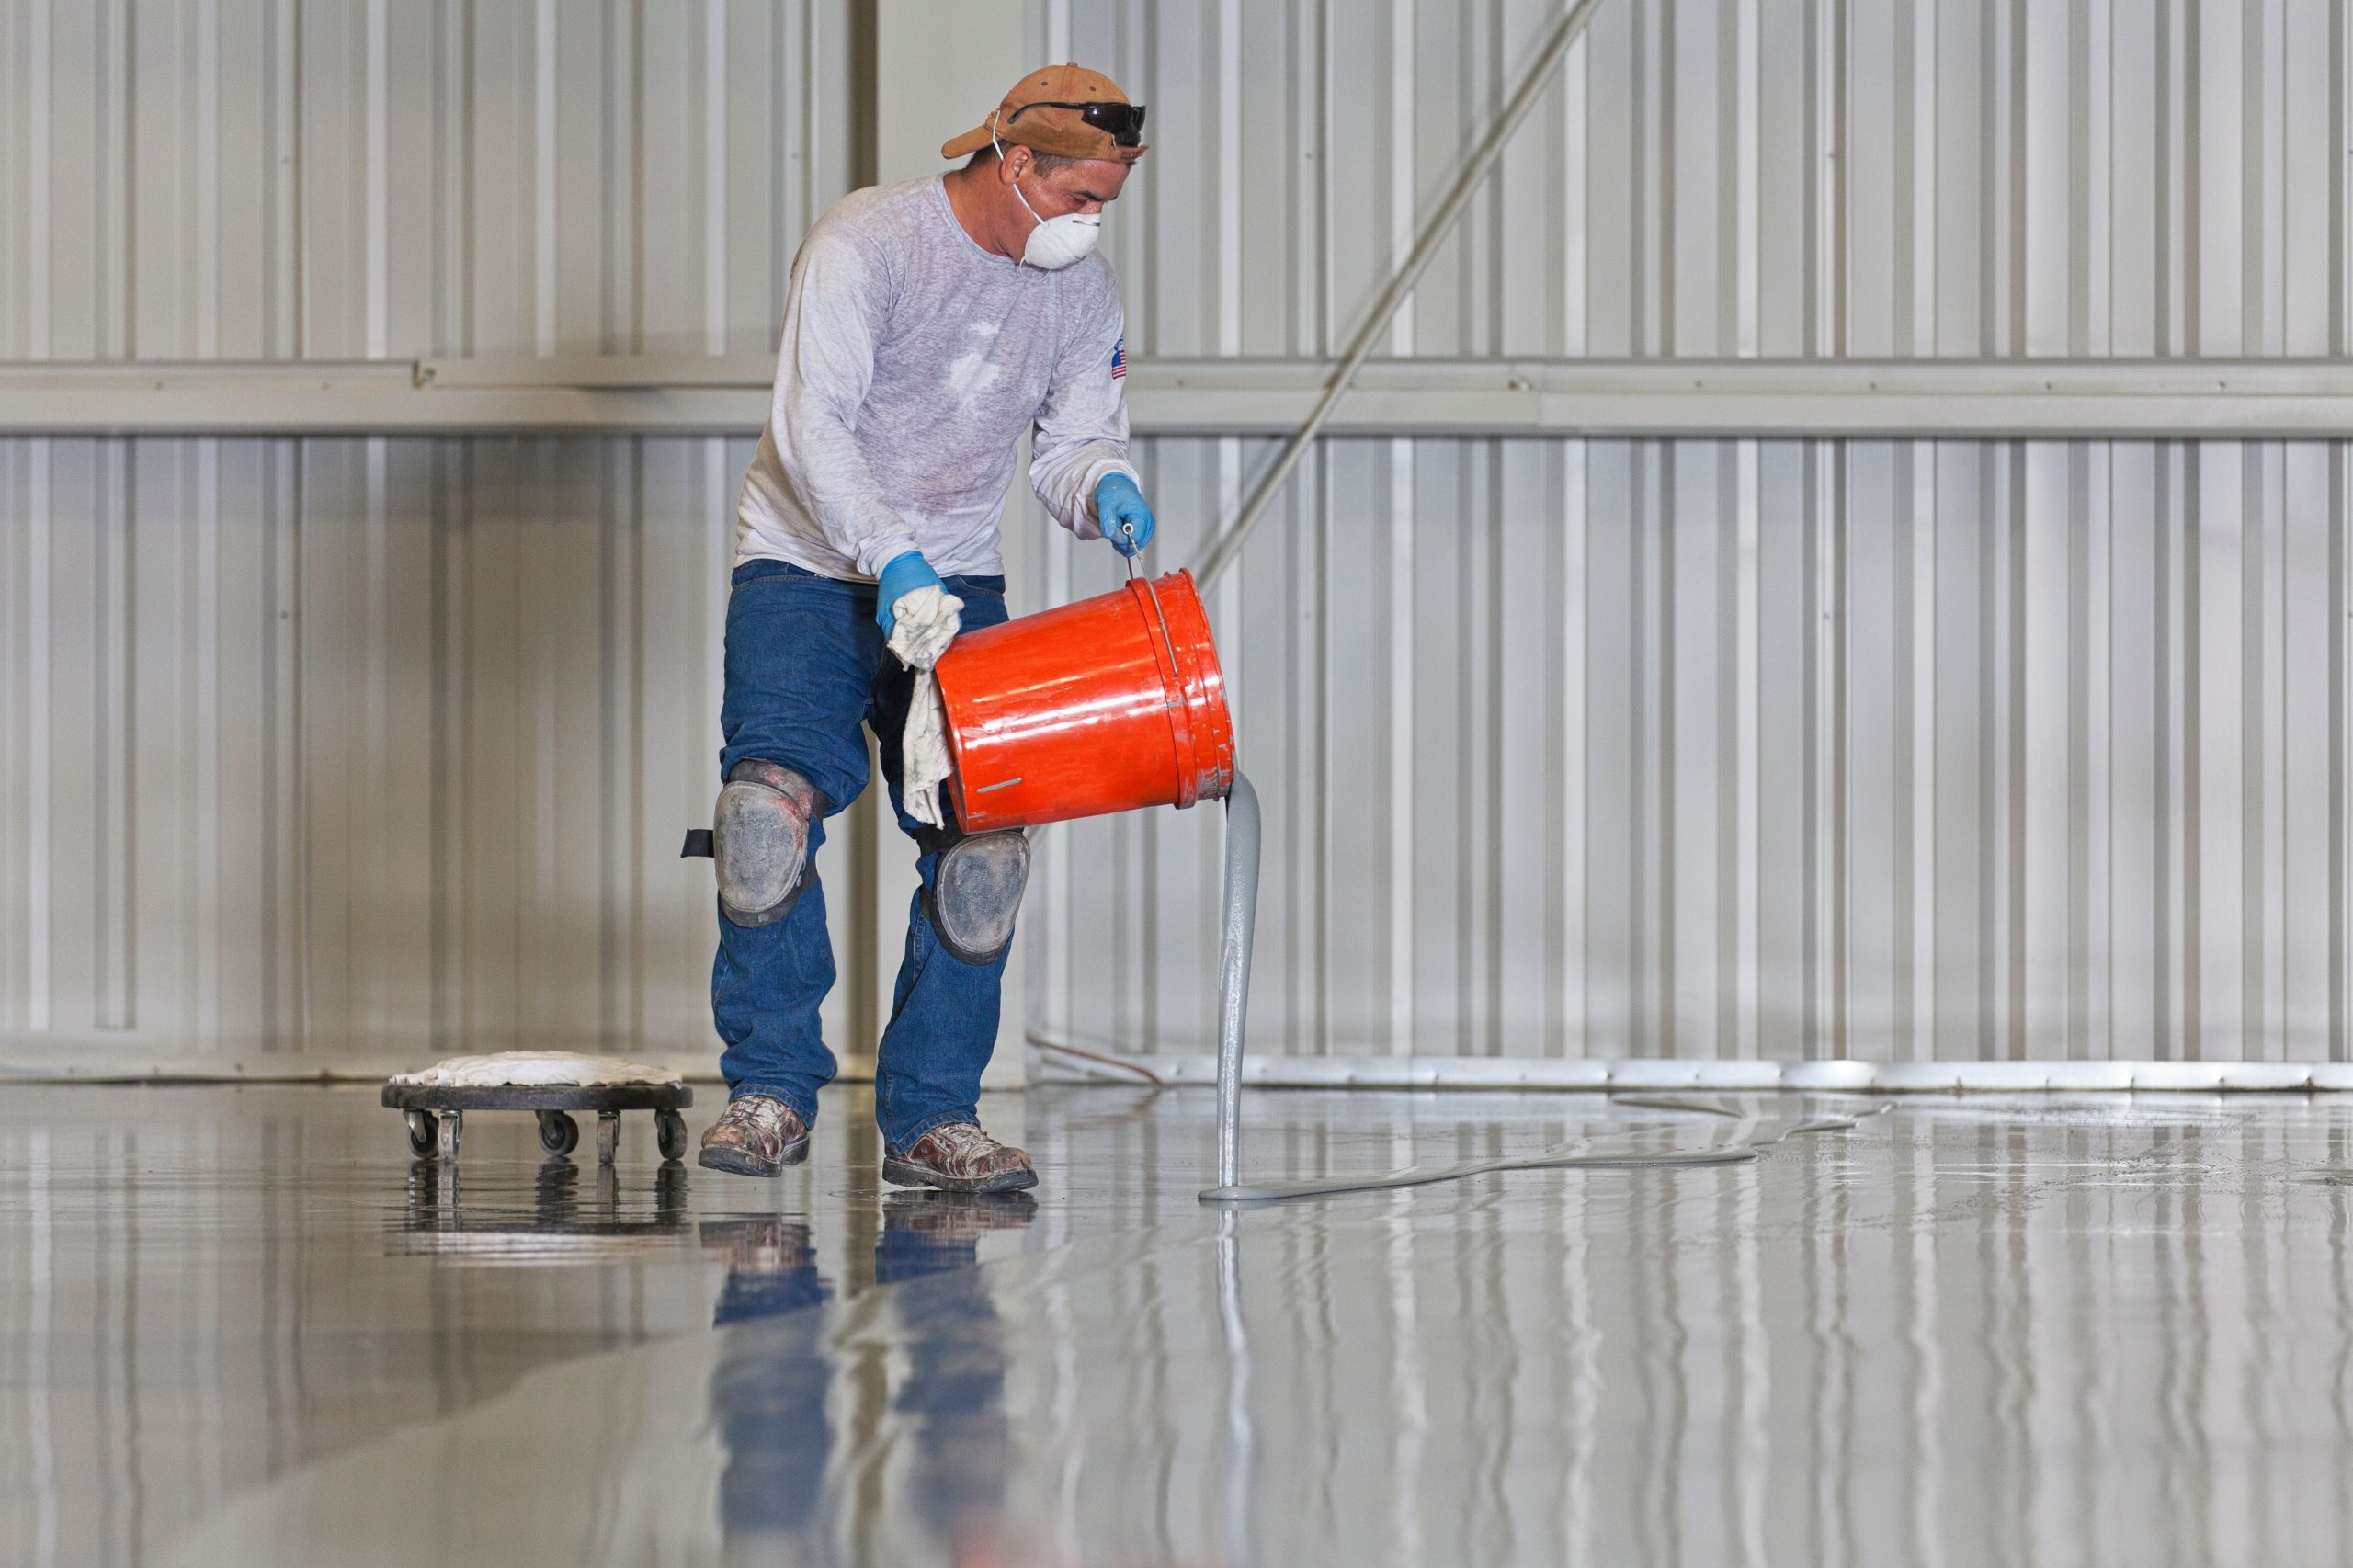 Applying coating to warehouse floor